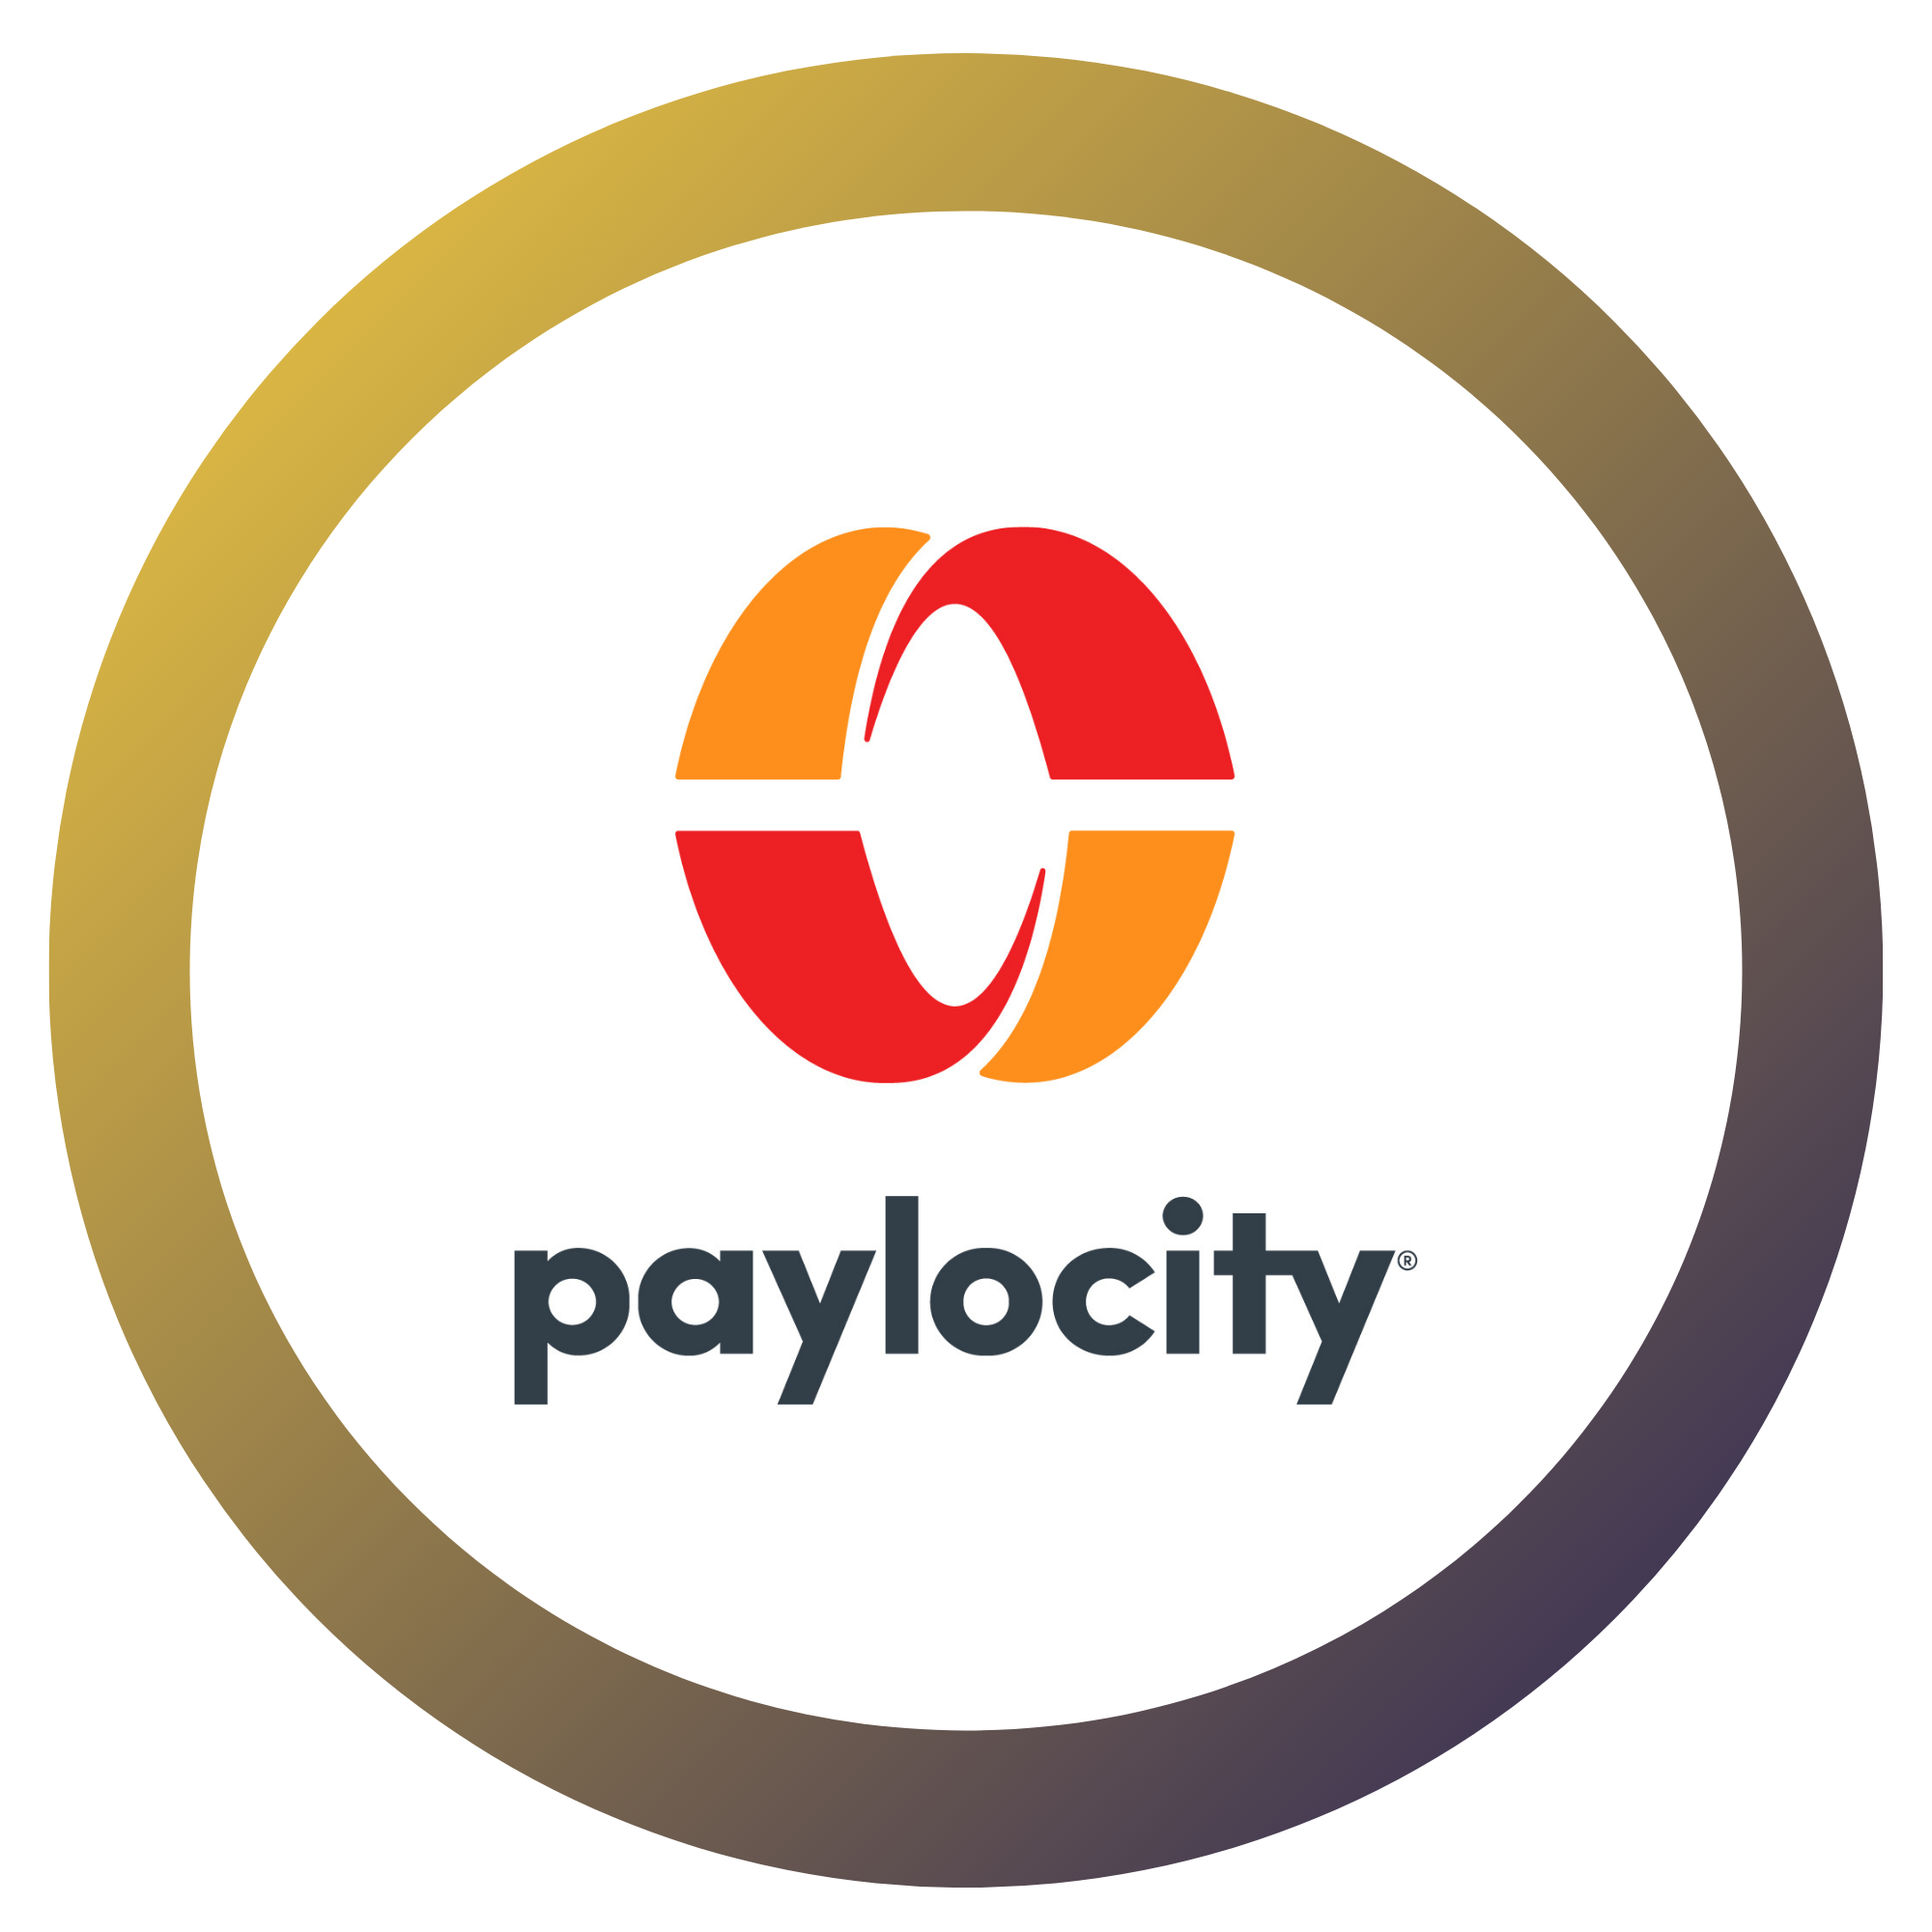 Paylocity is a Campus Forward Award Winner 2022